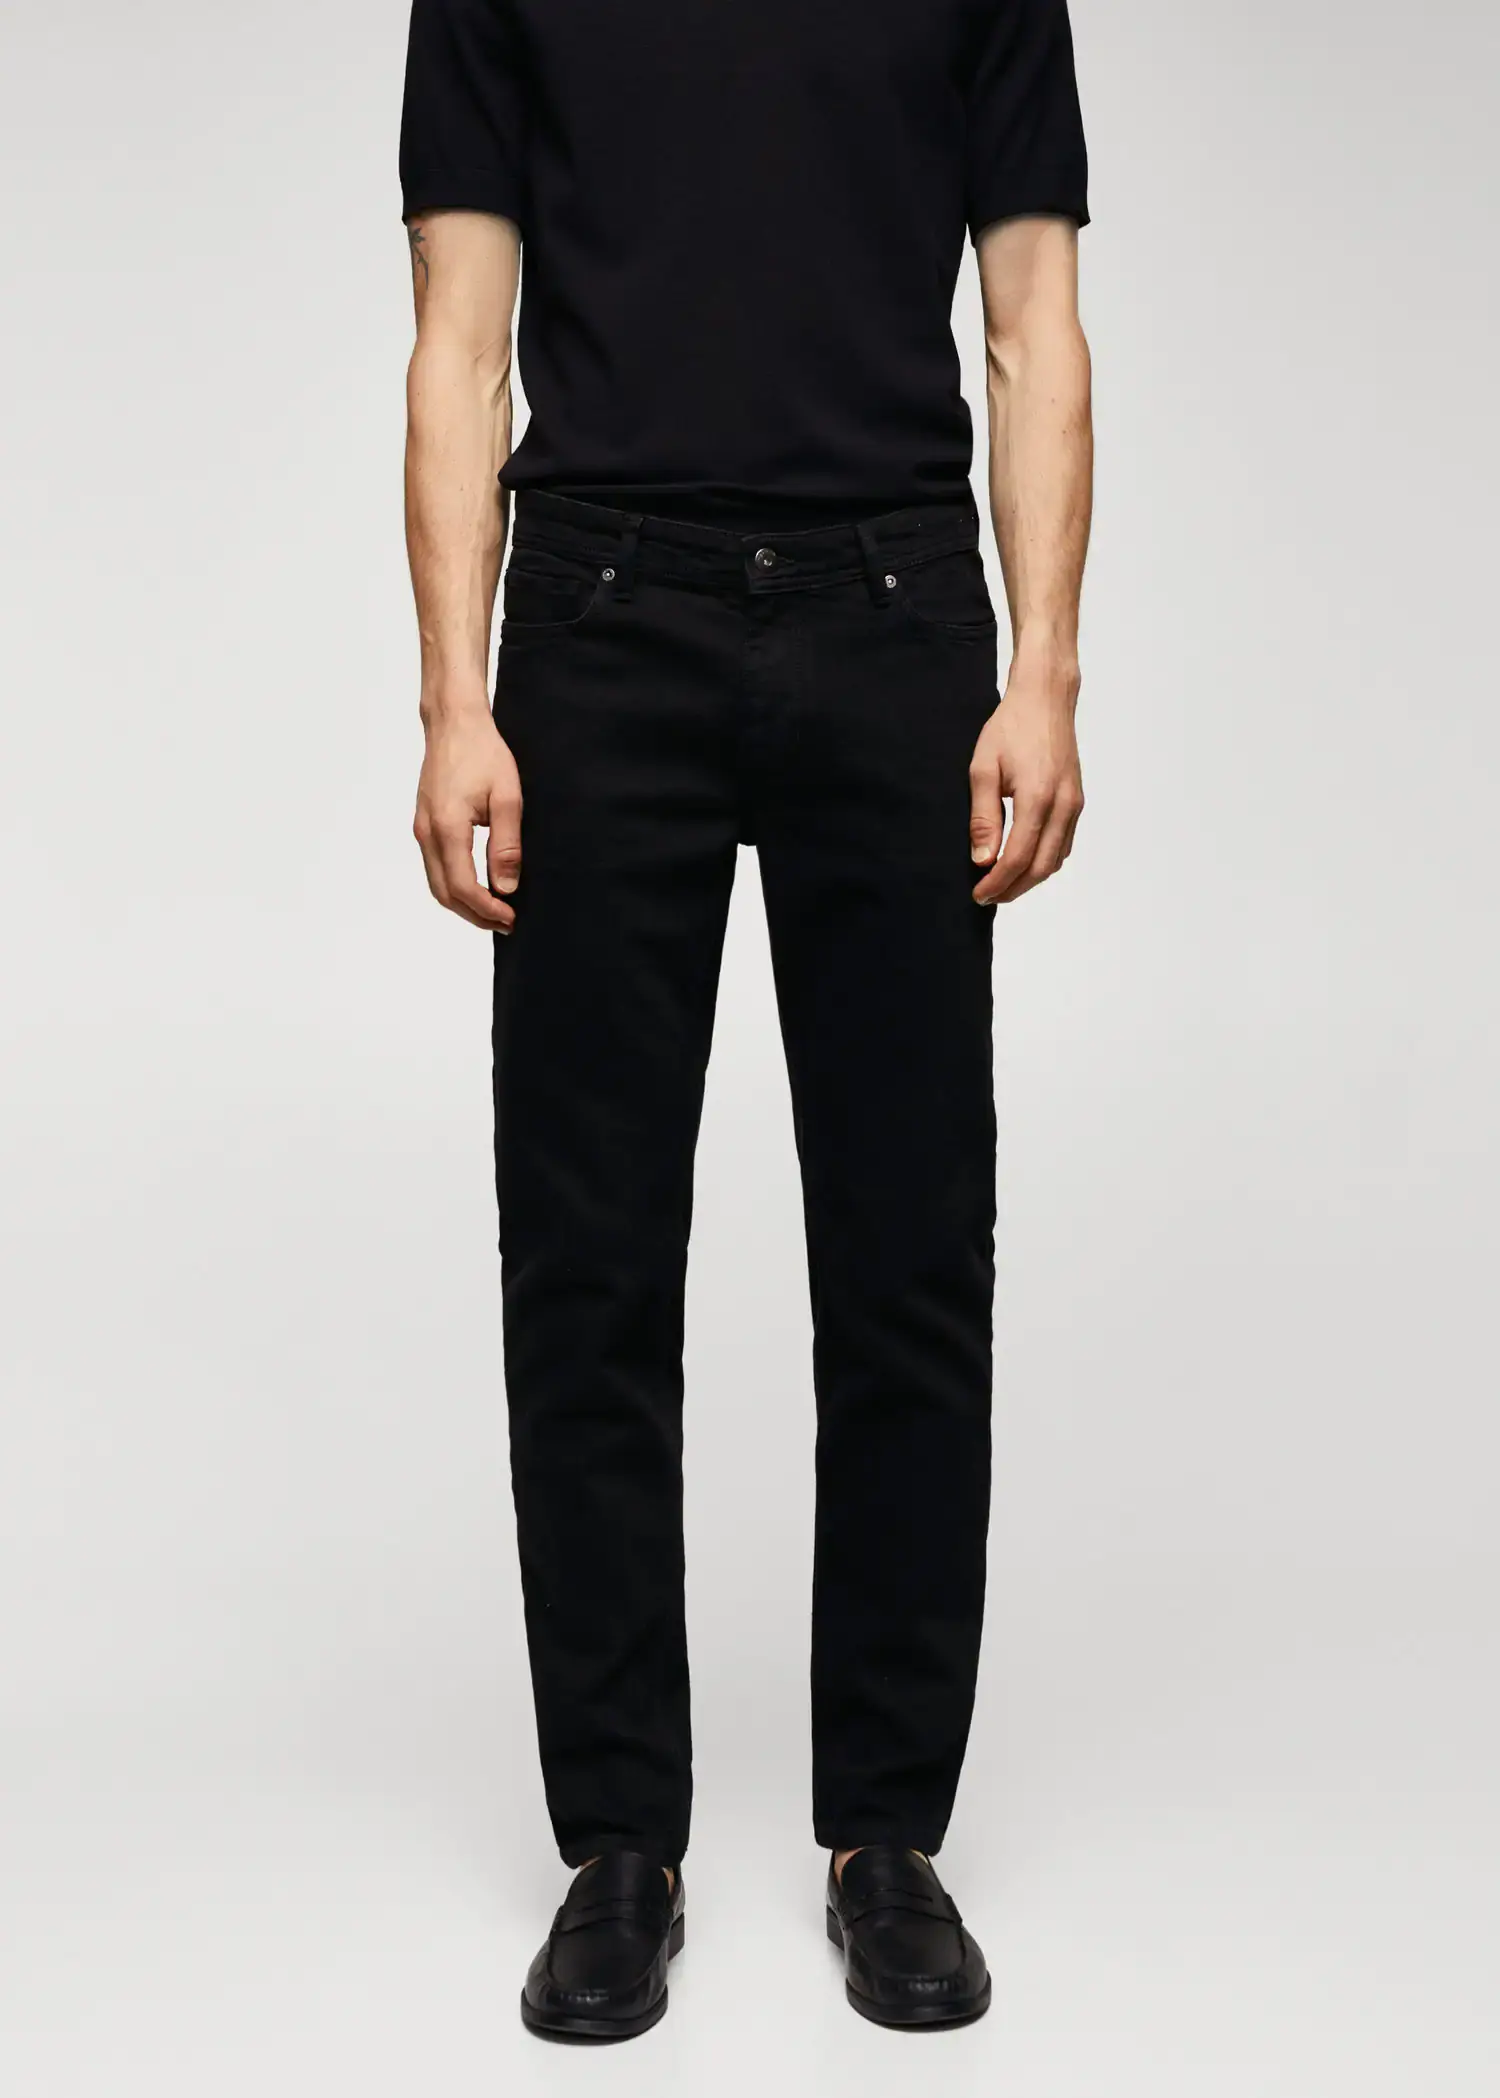 Mango Jan slim-fit jeans. a man wearing black jeans and a black shirt. 